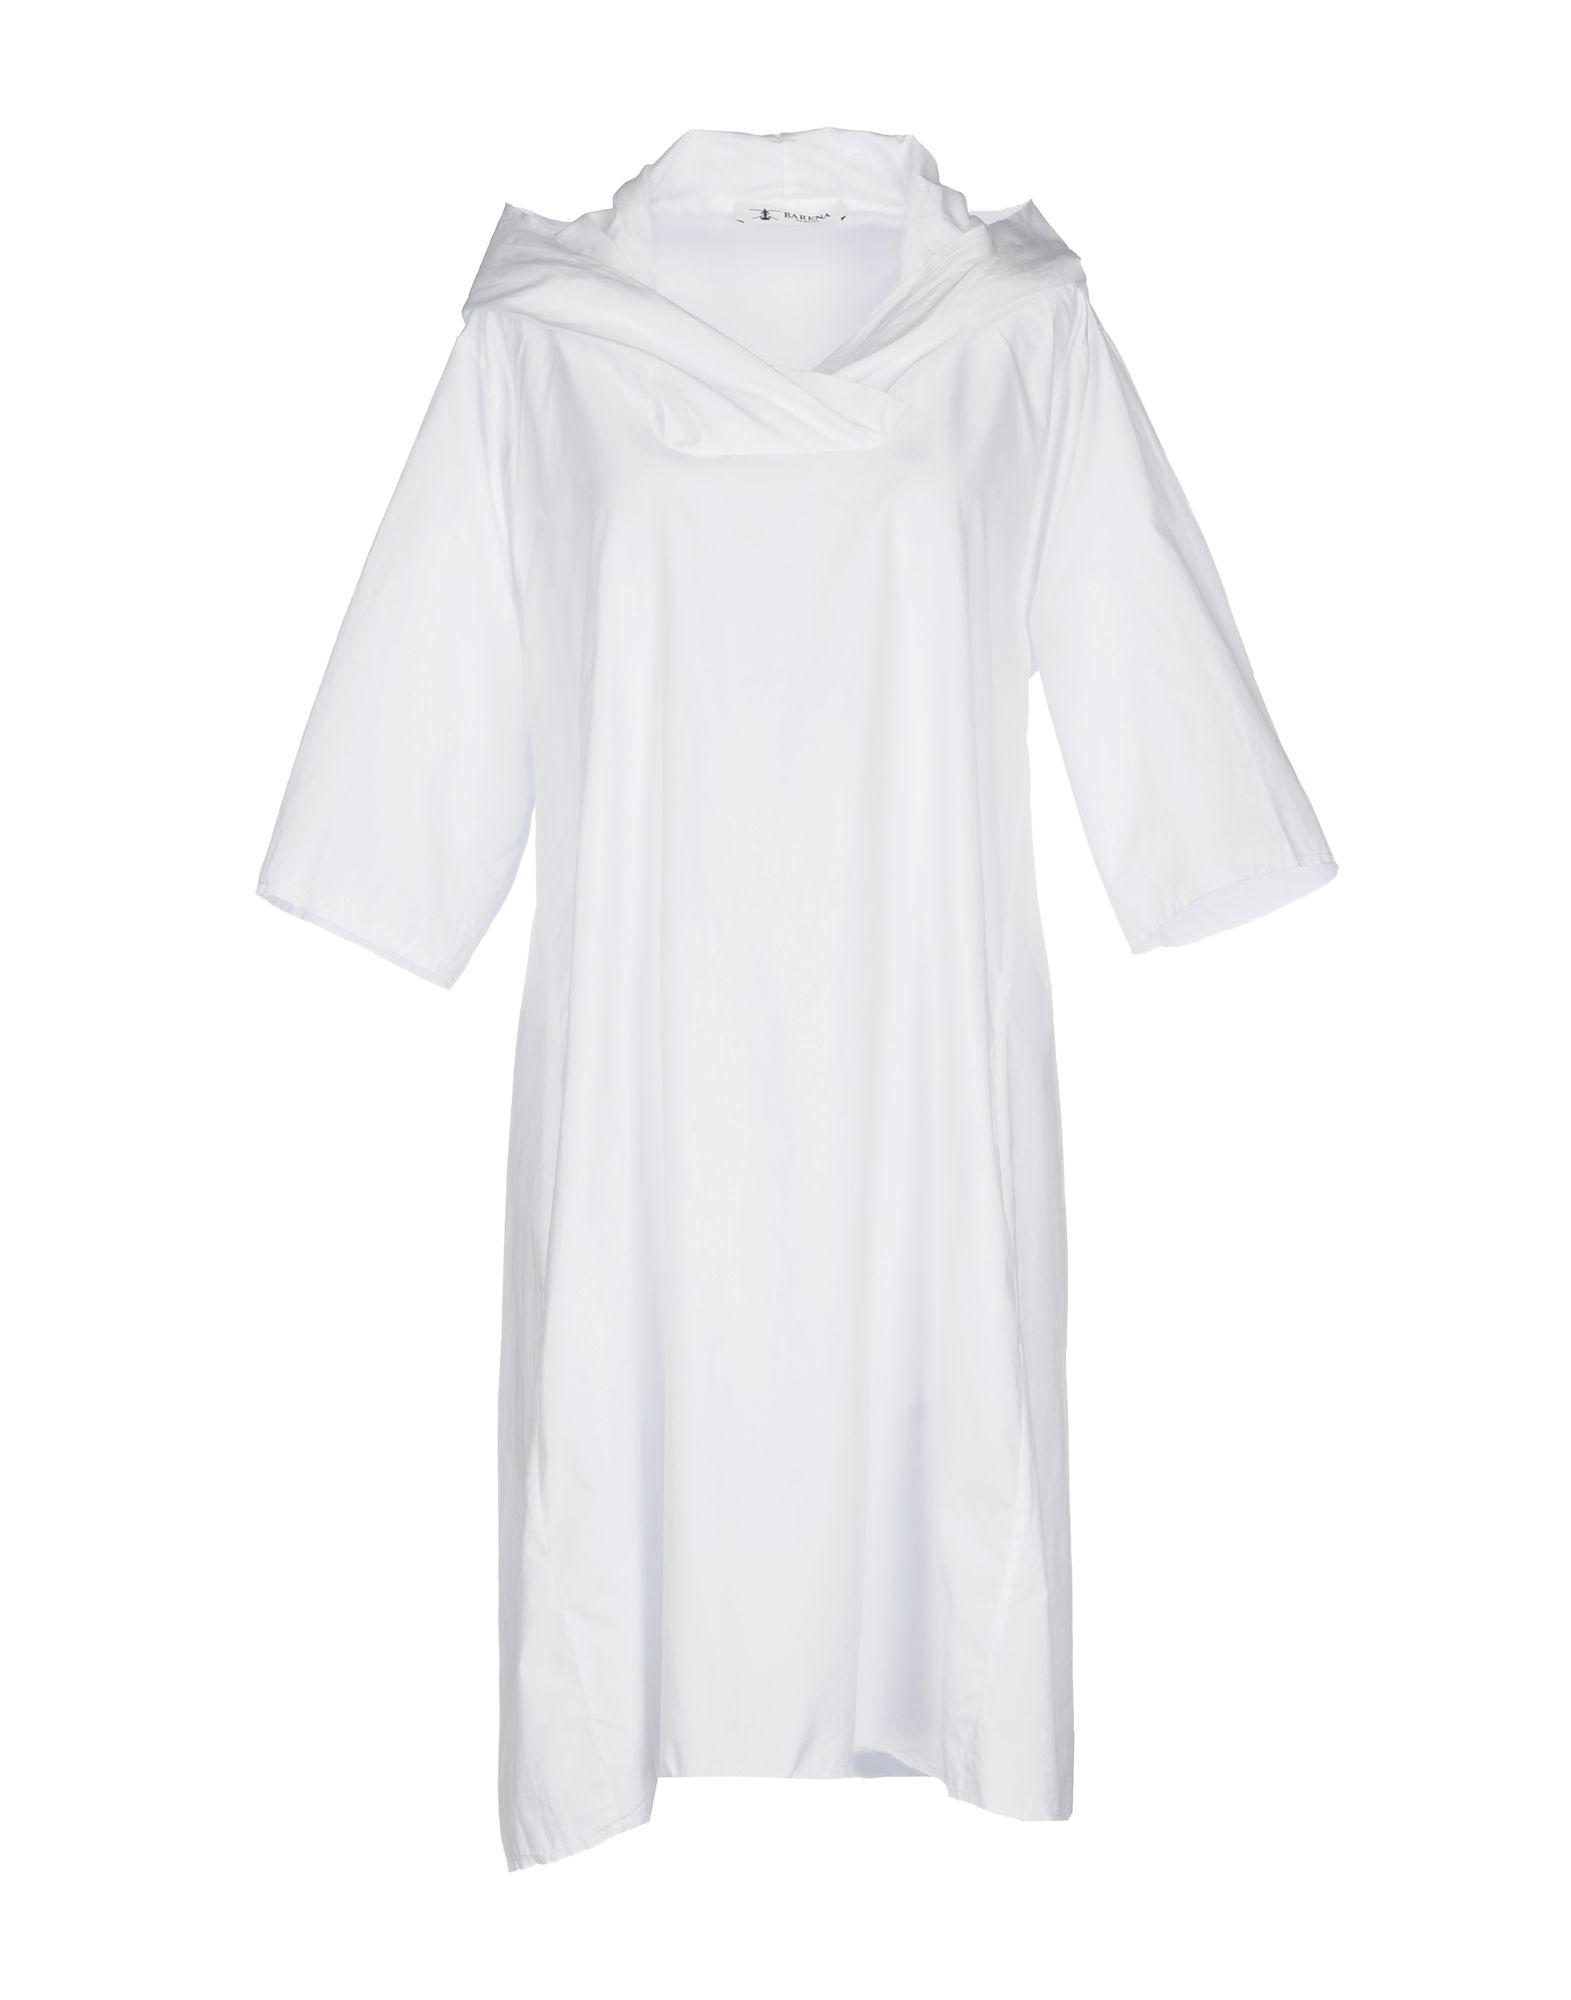 Barena Cotton Short Dress in White - Lyst